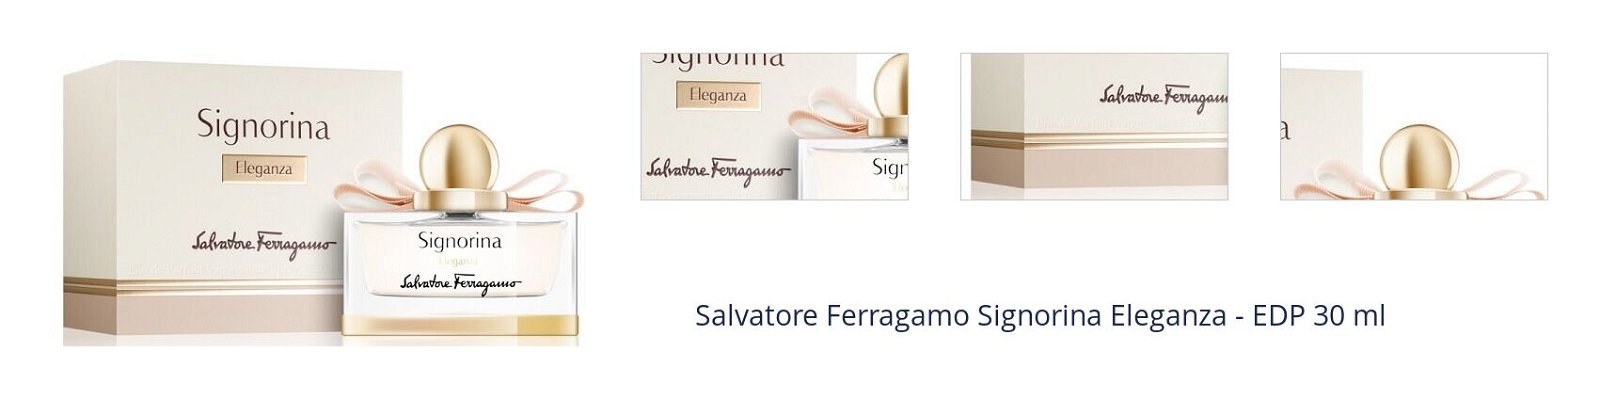 Salvatore Ferragamo Signorina Eleganza - EDP 30 ml 7